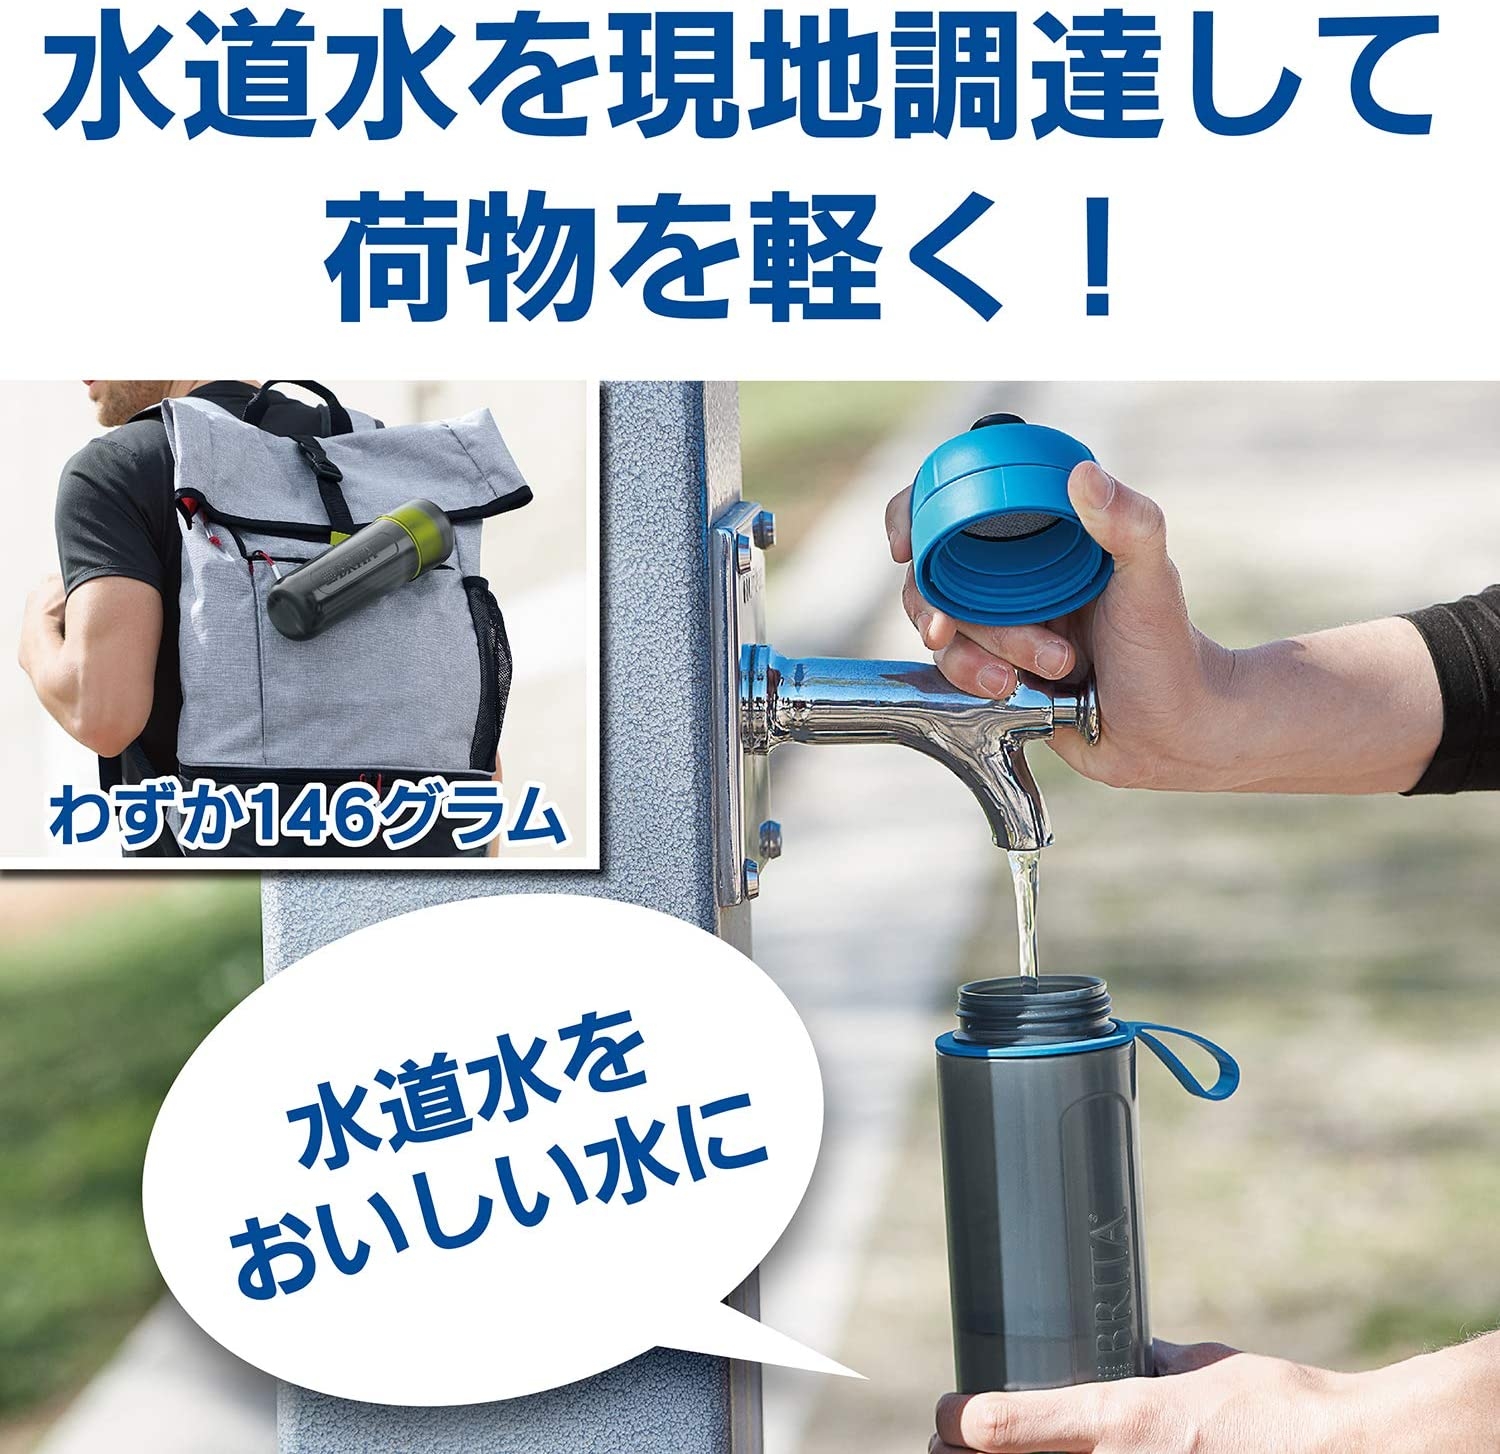 BRITA(ブリタ) ボトル型浄水器アクティブの商品画像サムネ2 